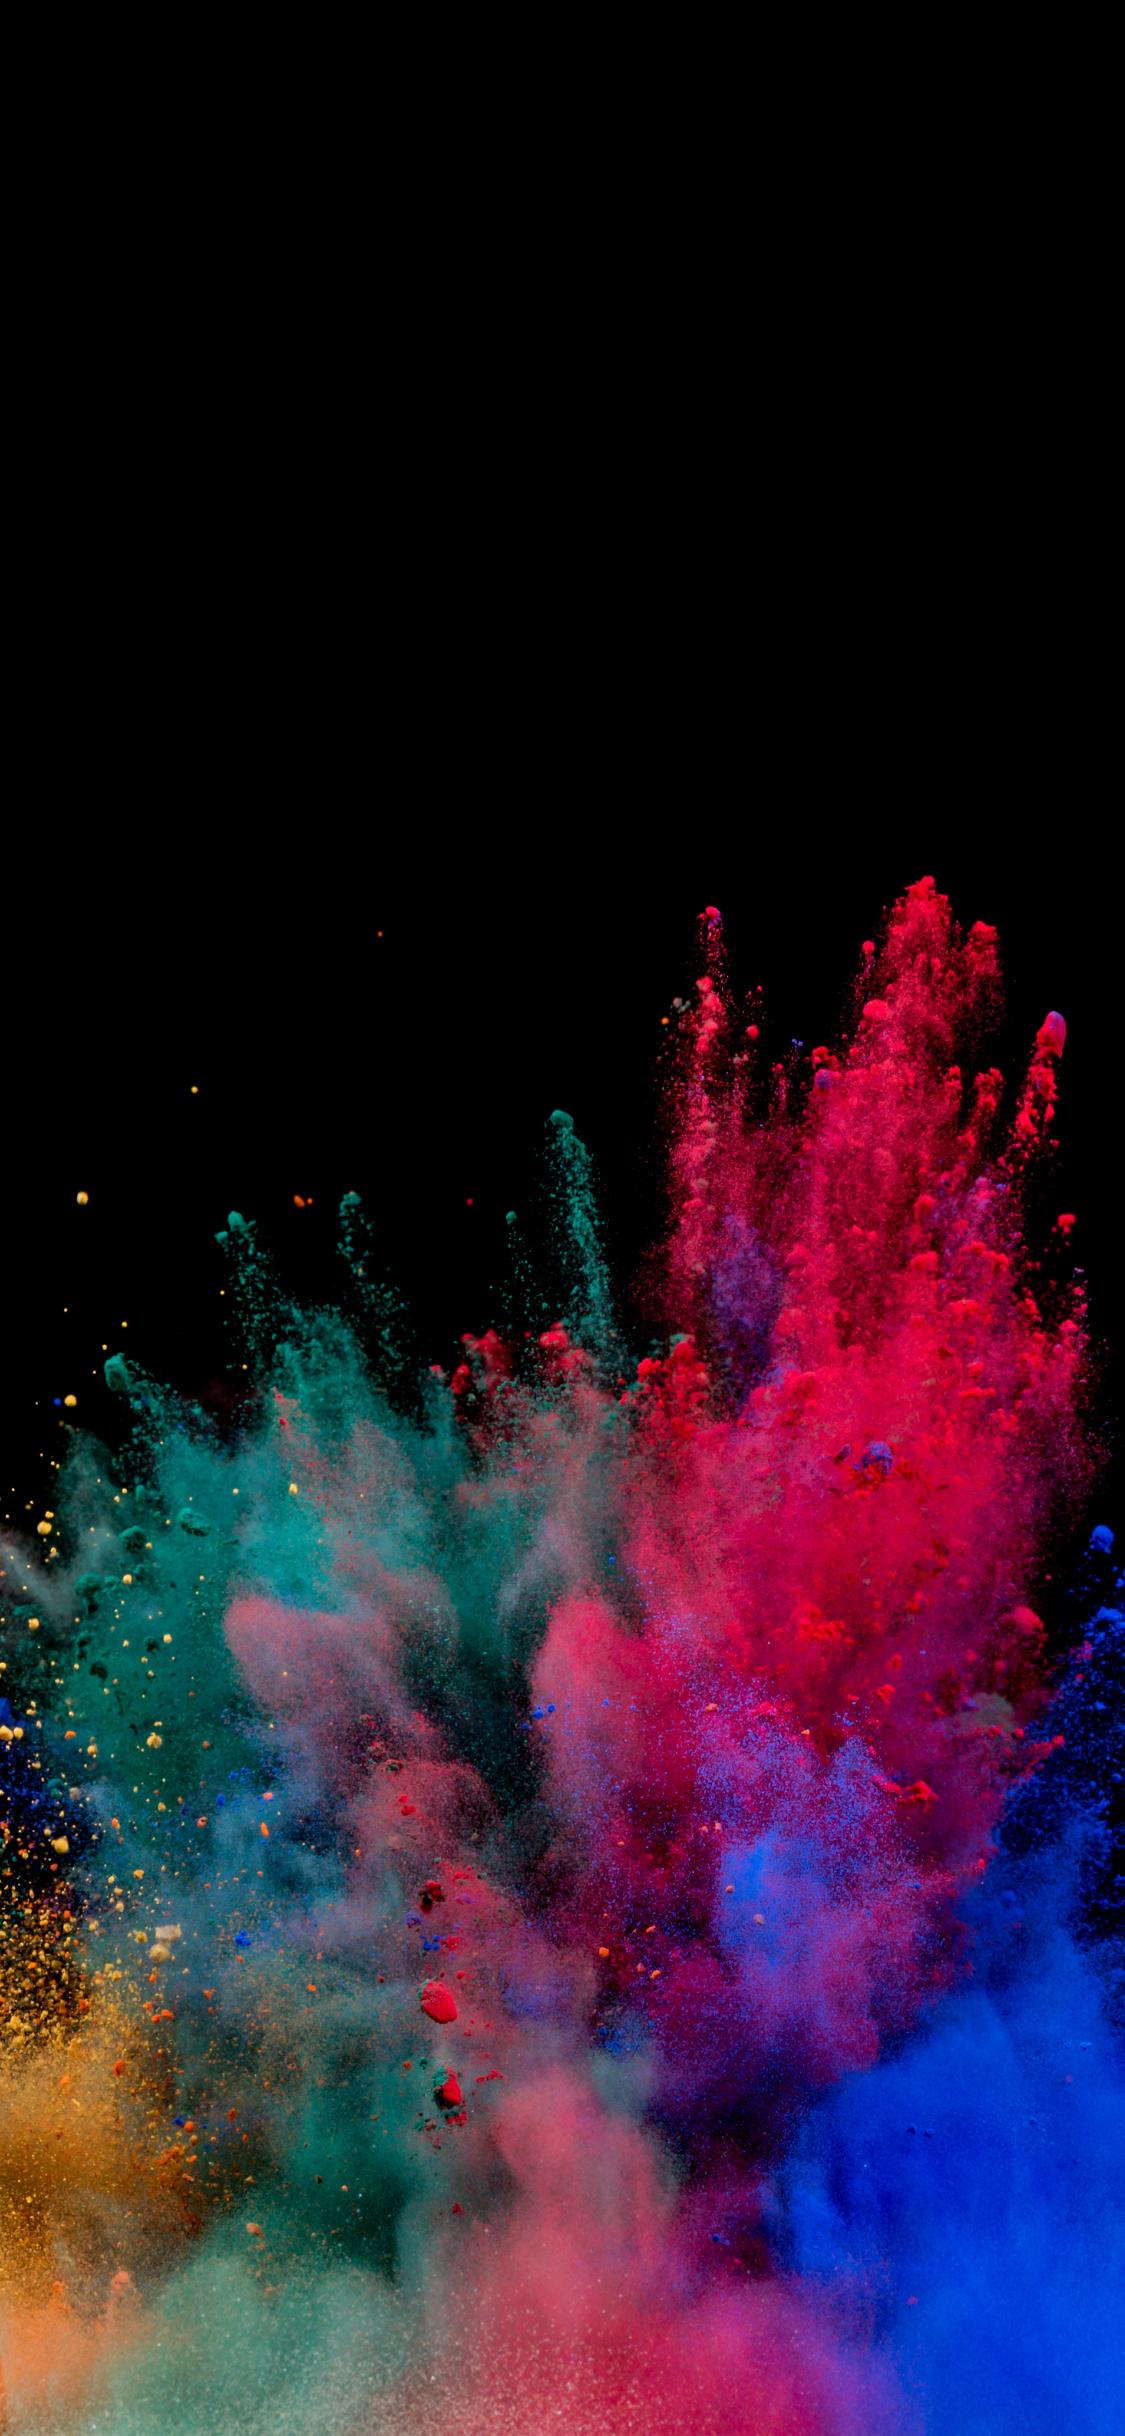 Download 1125x2436 wallpaper colors, blast, explosion, colorful